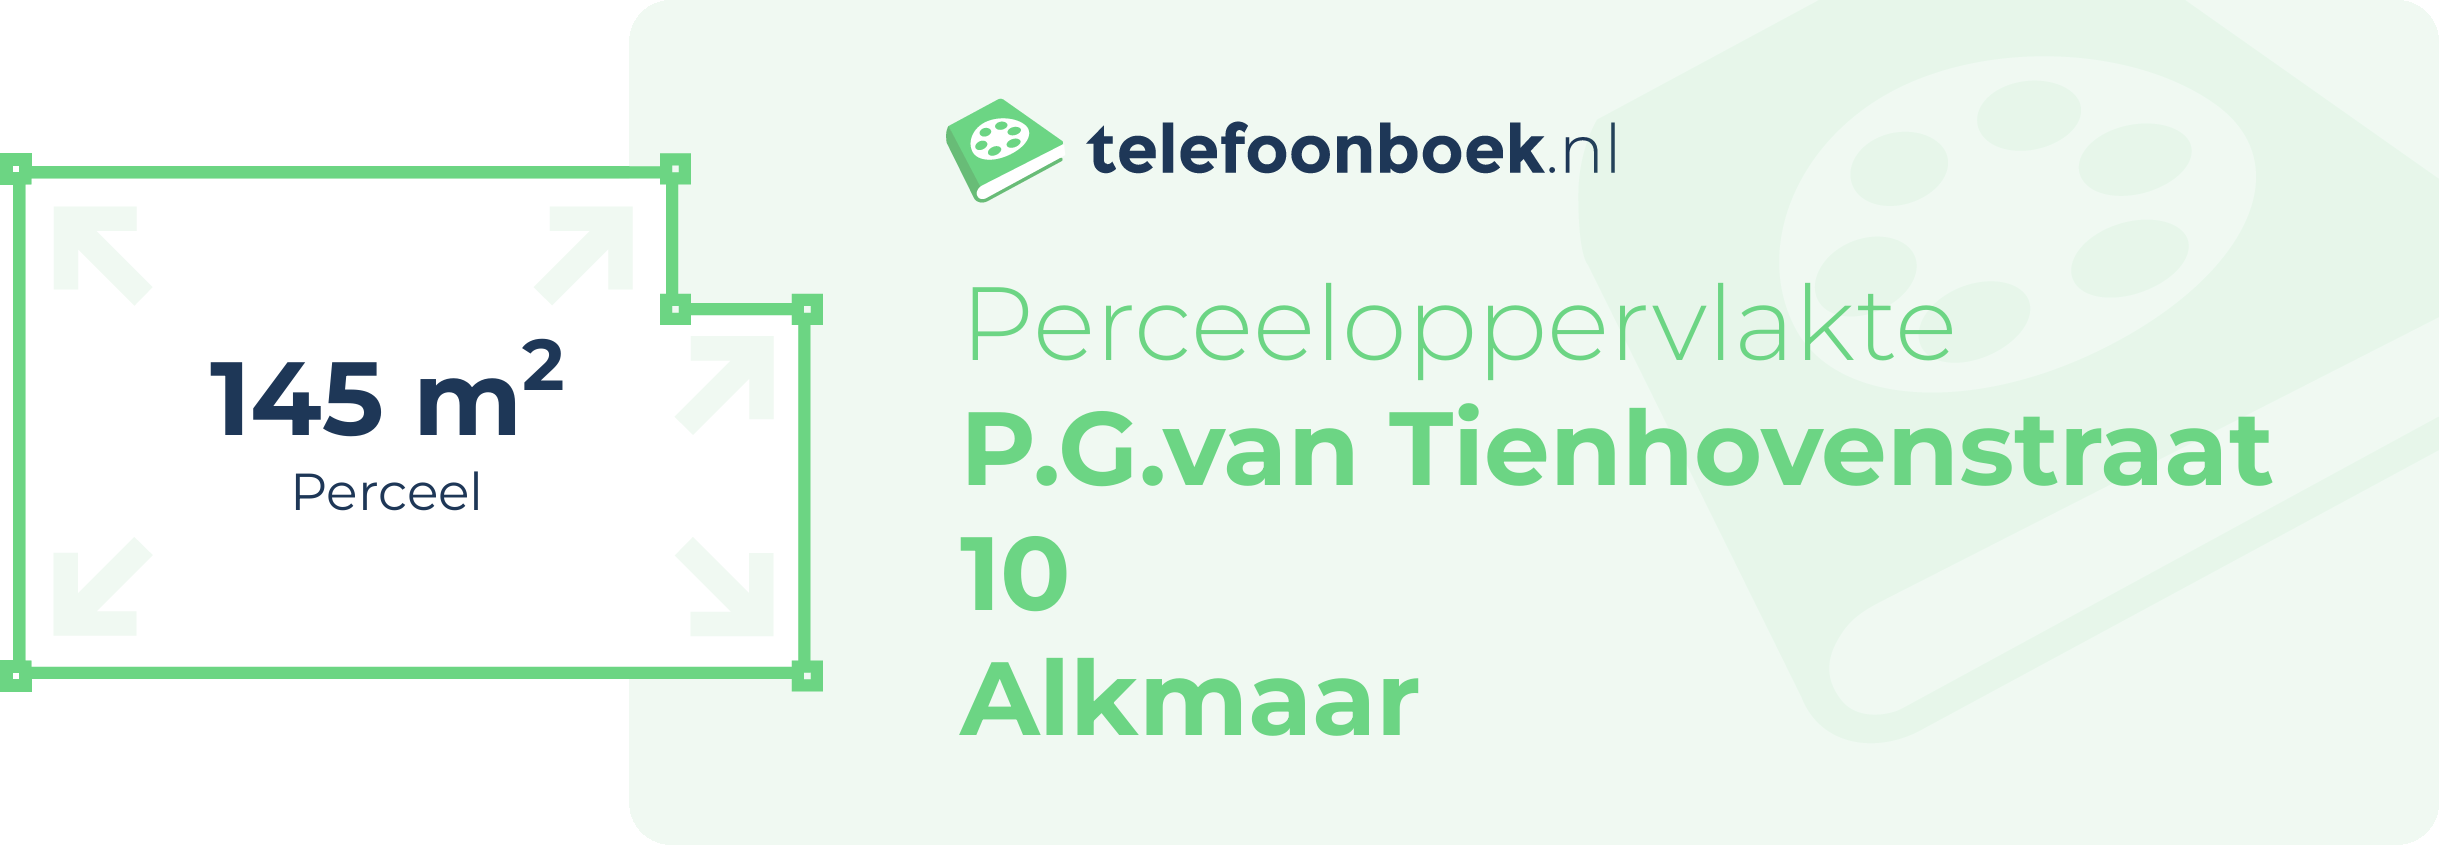 Perceeloppervlakte P.G.van Tienhovenstraat 10 Alkmaar